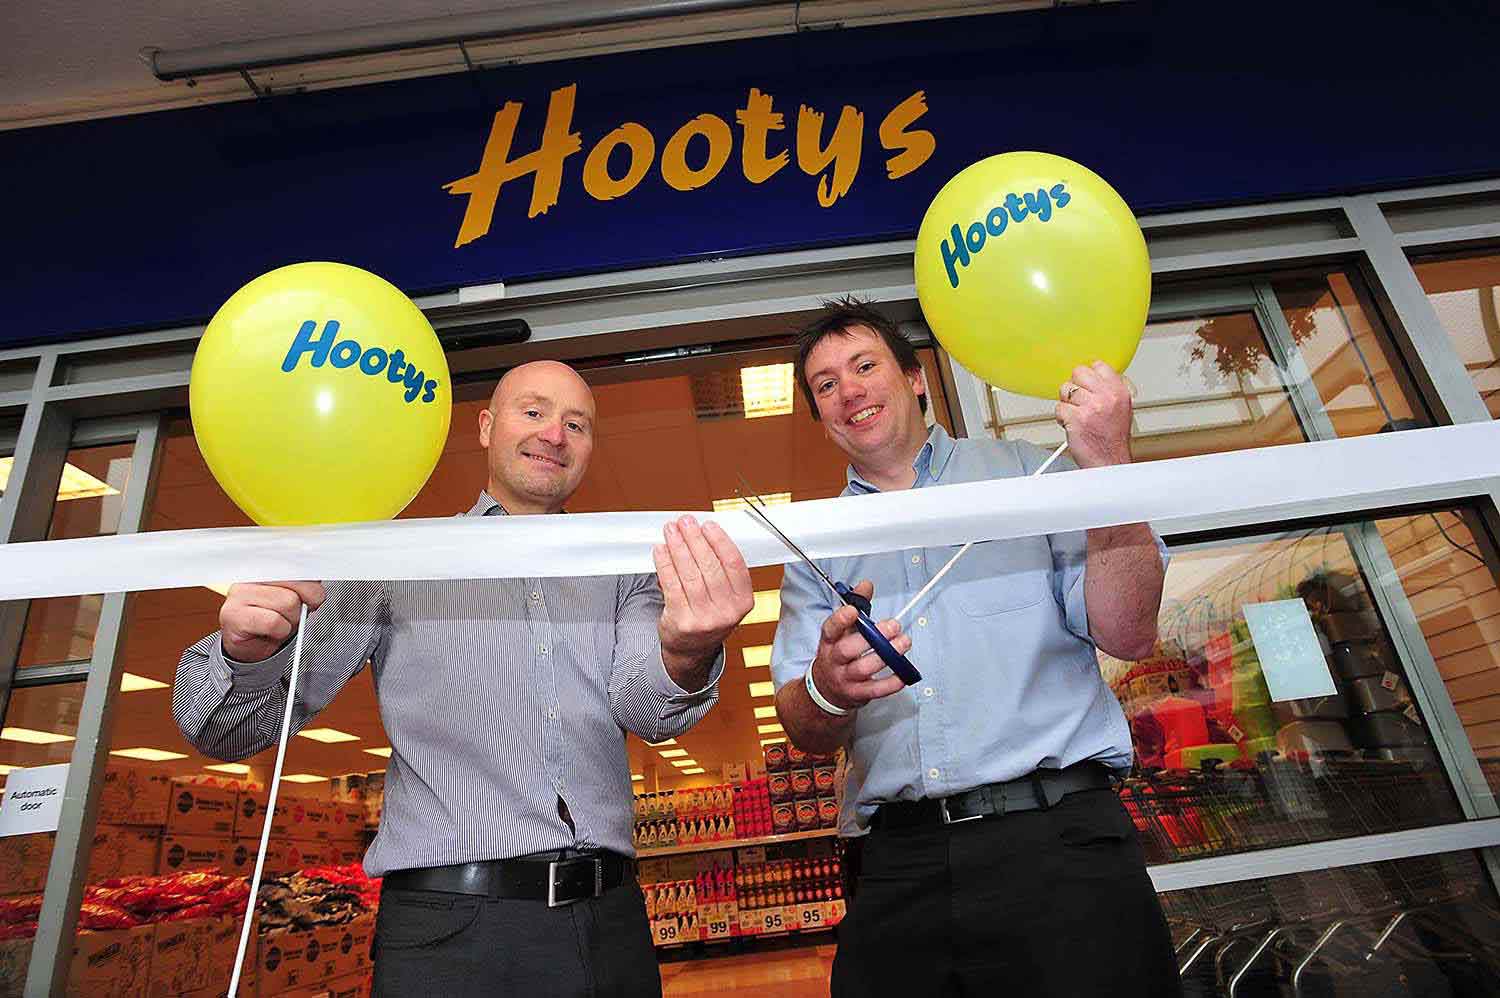 hootys store opening in Erdington in Birmingham. 2  men cut ribbon  image taken for pr news release. by picturepress  photography